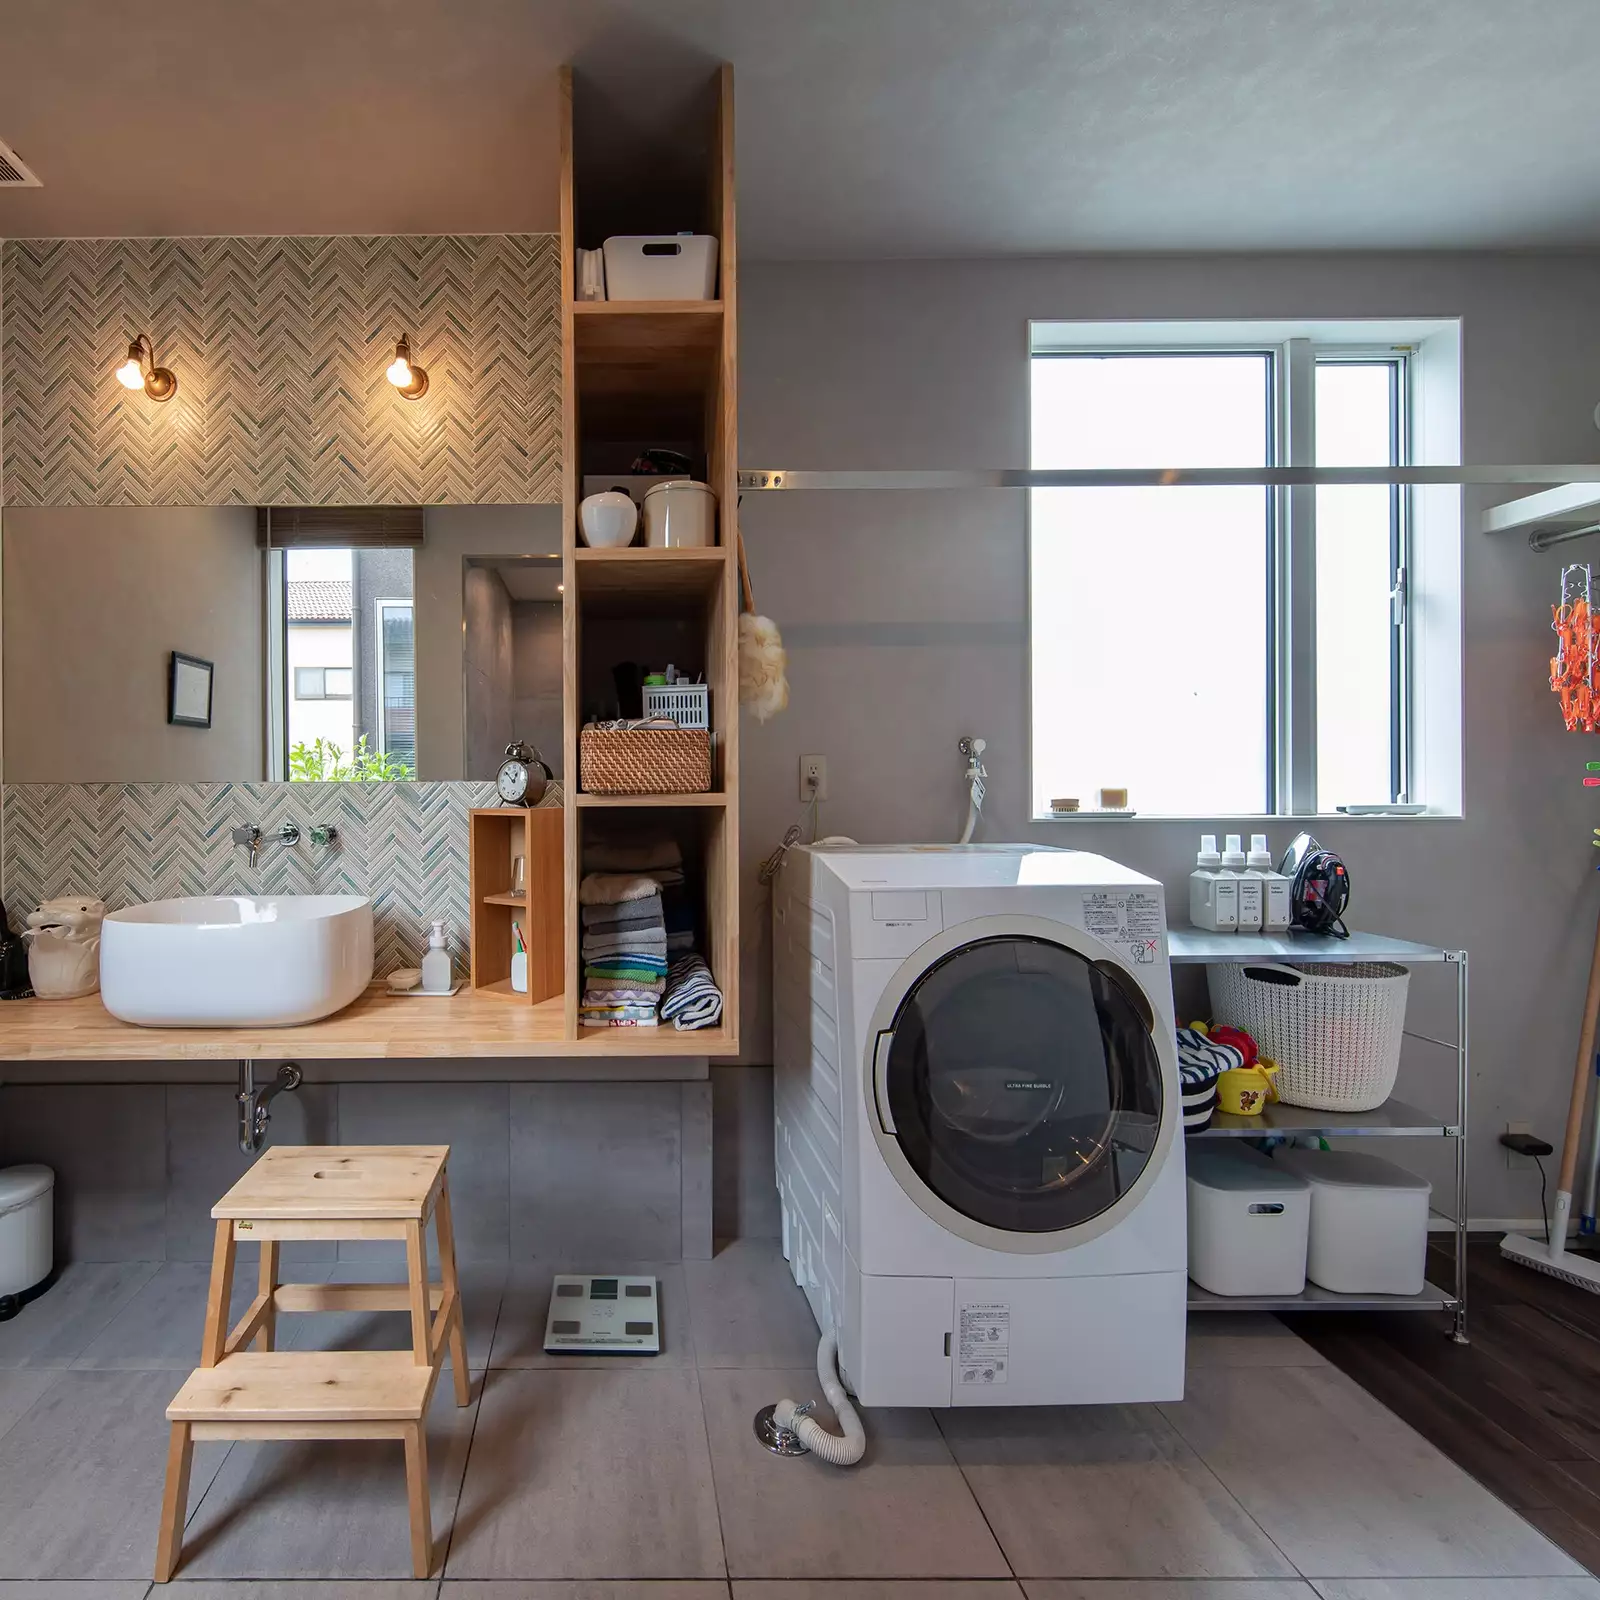 R+houseの物件の洗面、洗濯、脱衣所の写真です。左から洗面台、洗濯室、乾燥室になっている。仕切りのない空間。